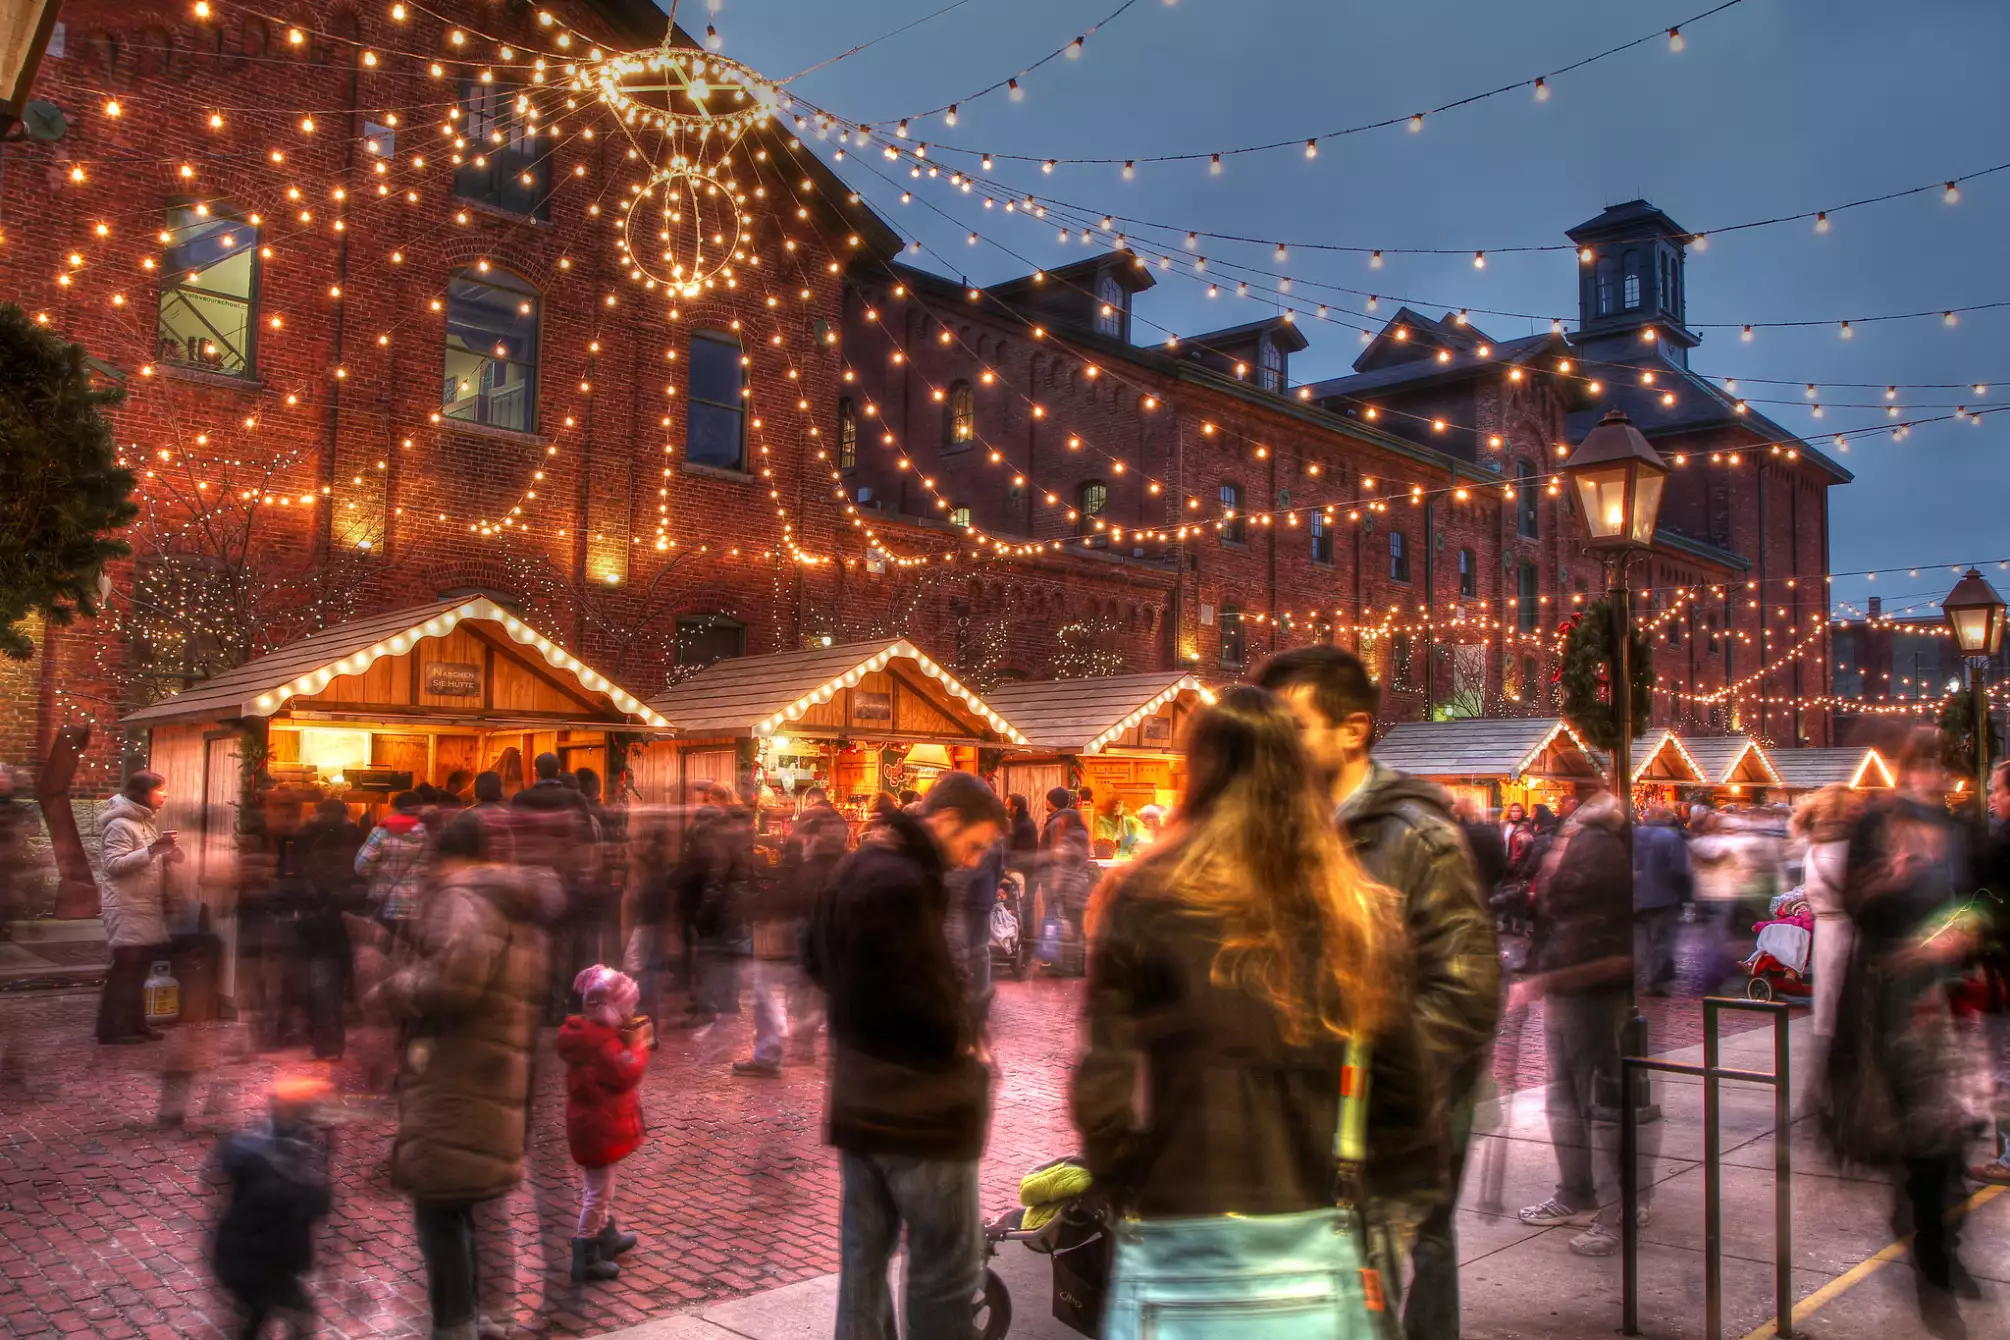 Christmas market photo by Allen McGregor on Flickr